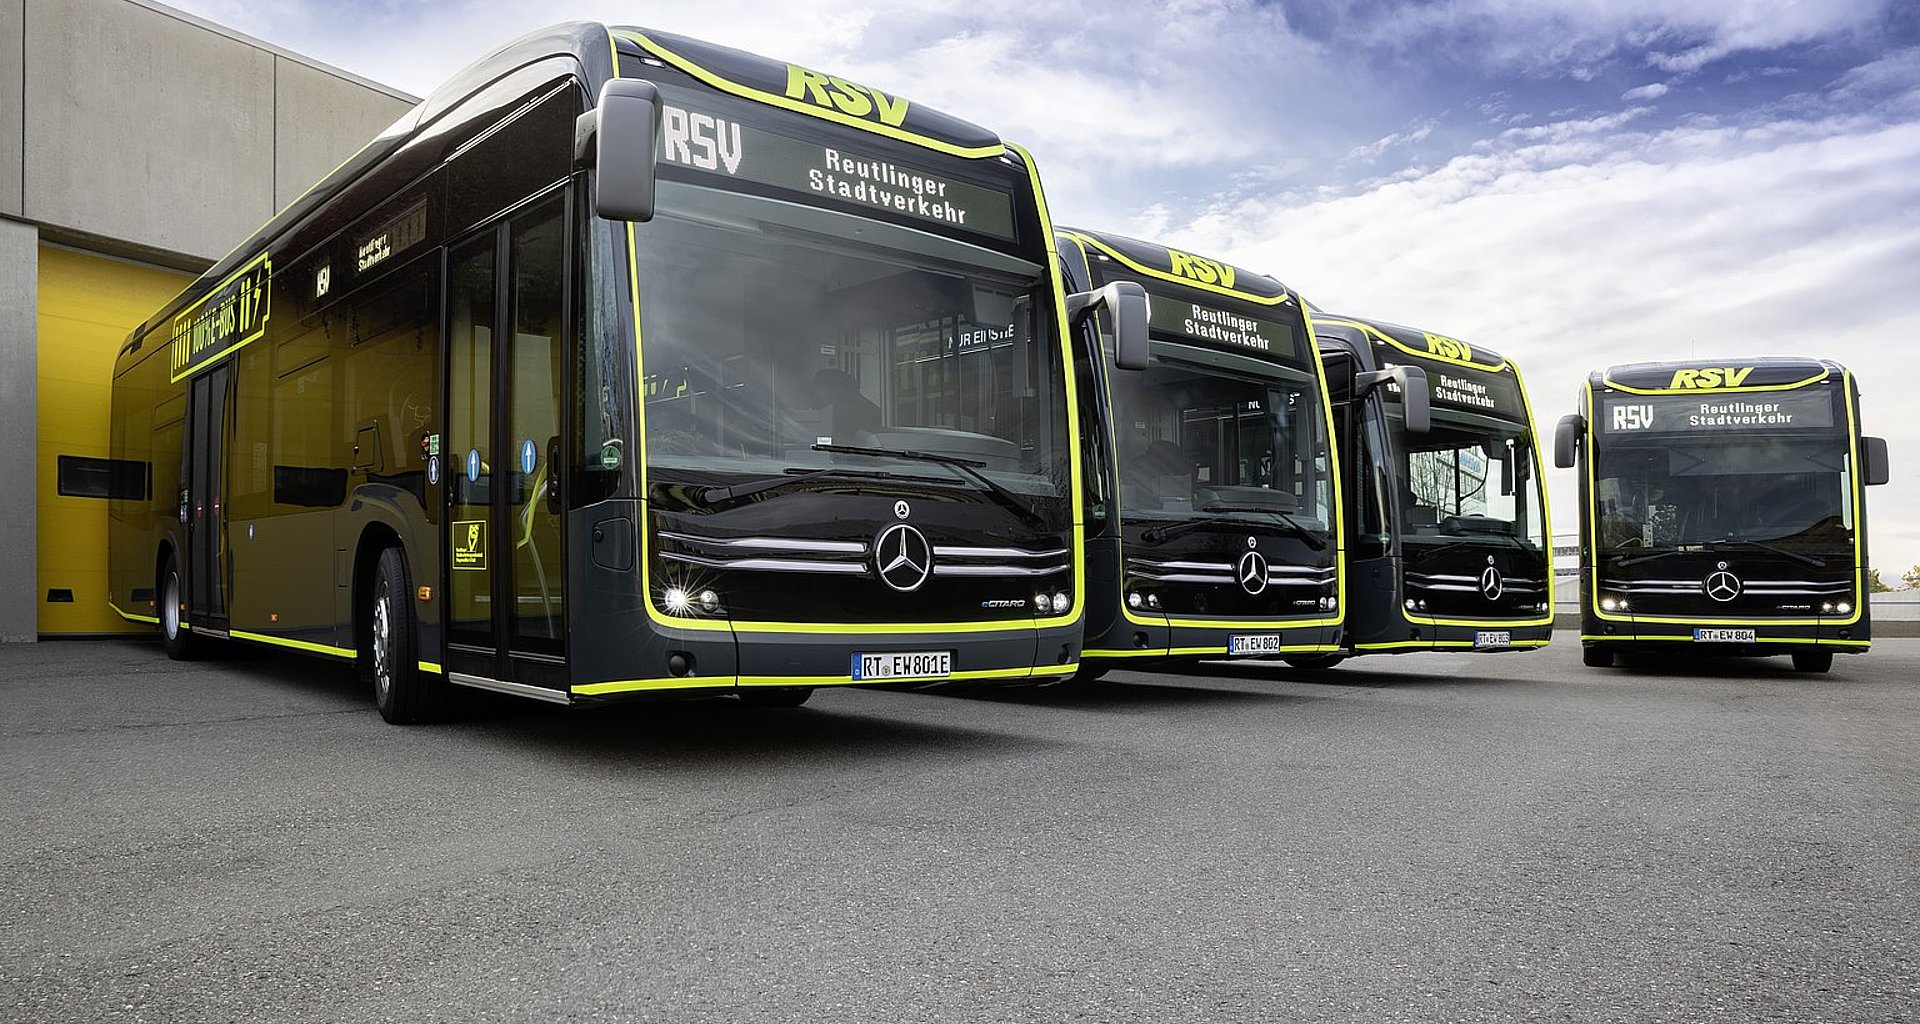 Bild zeigt vier schwarz, gelbe Reutlinger Stadtbusse.